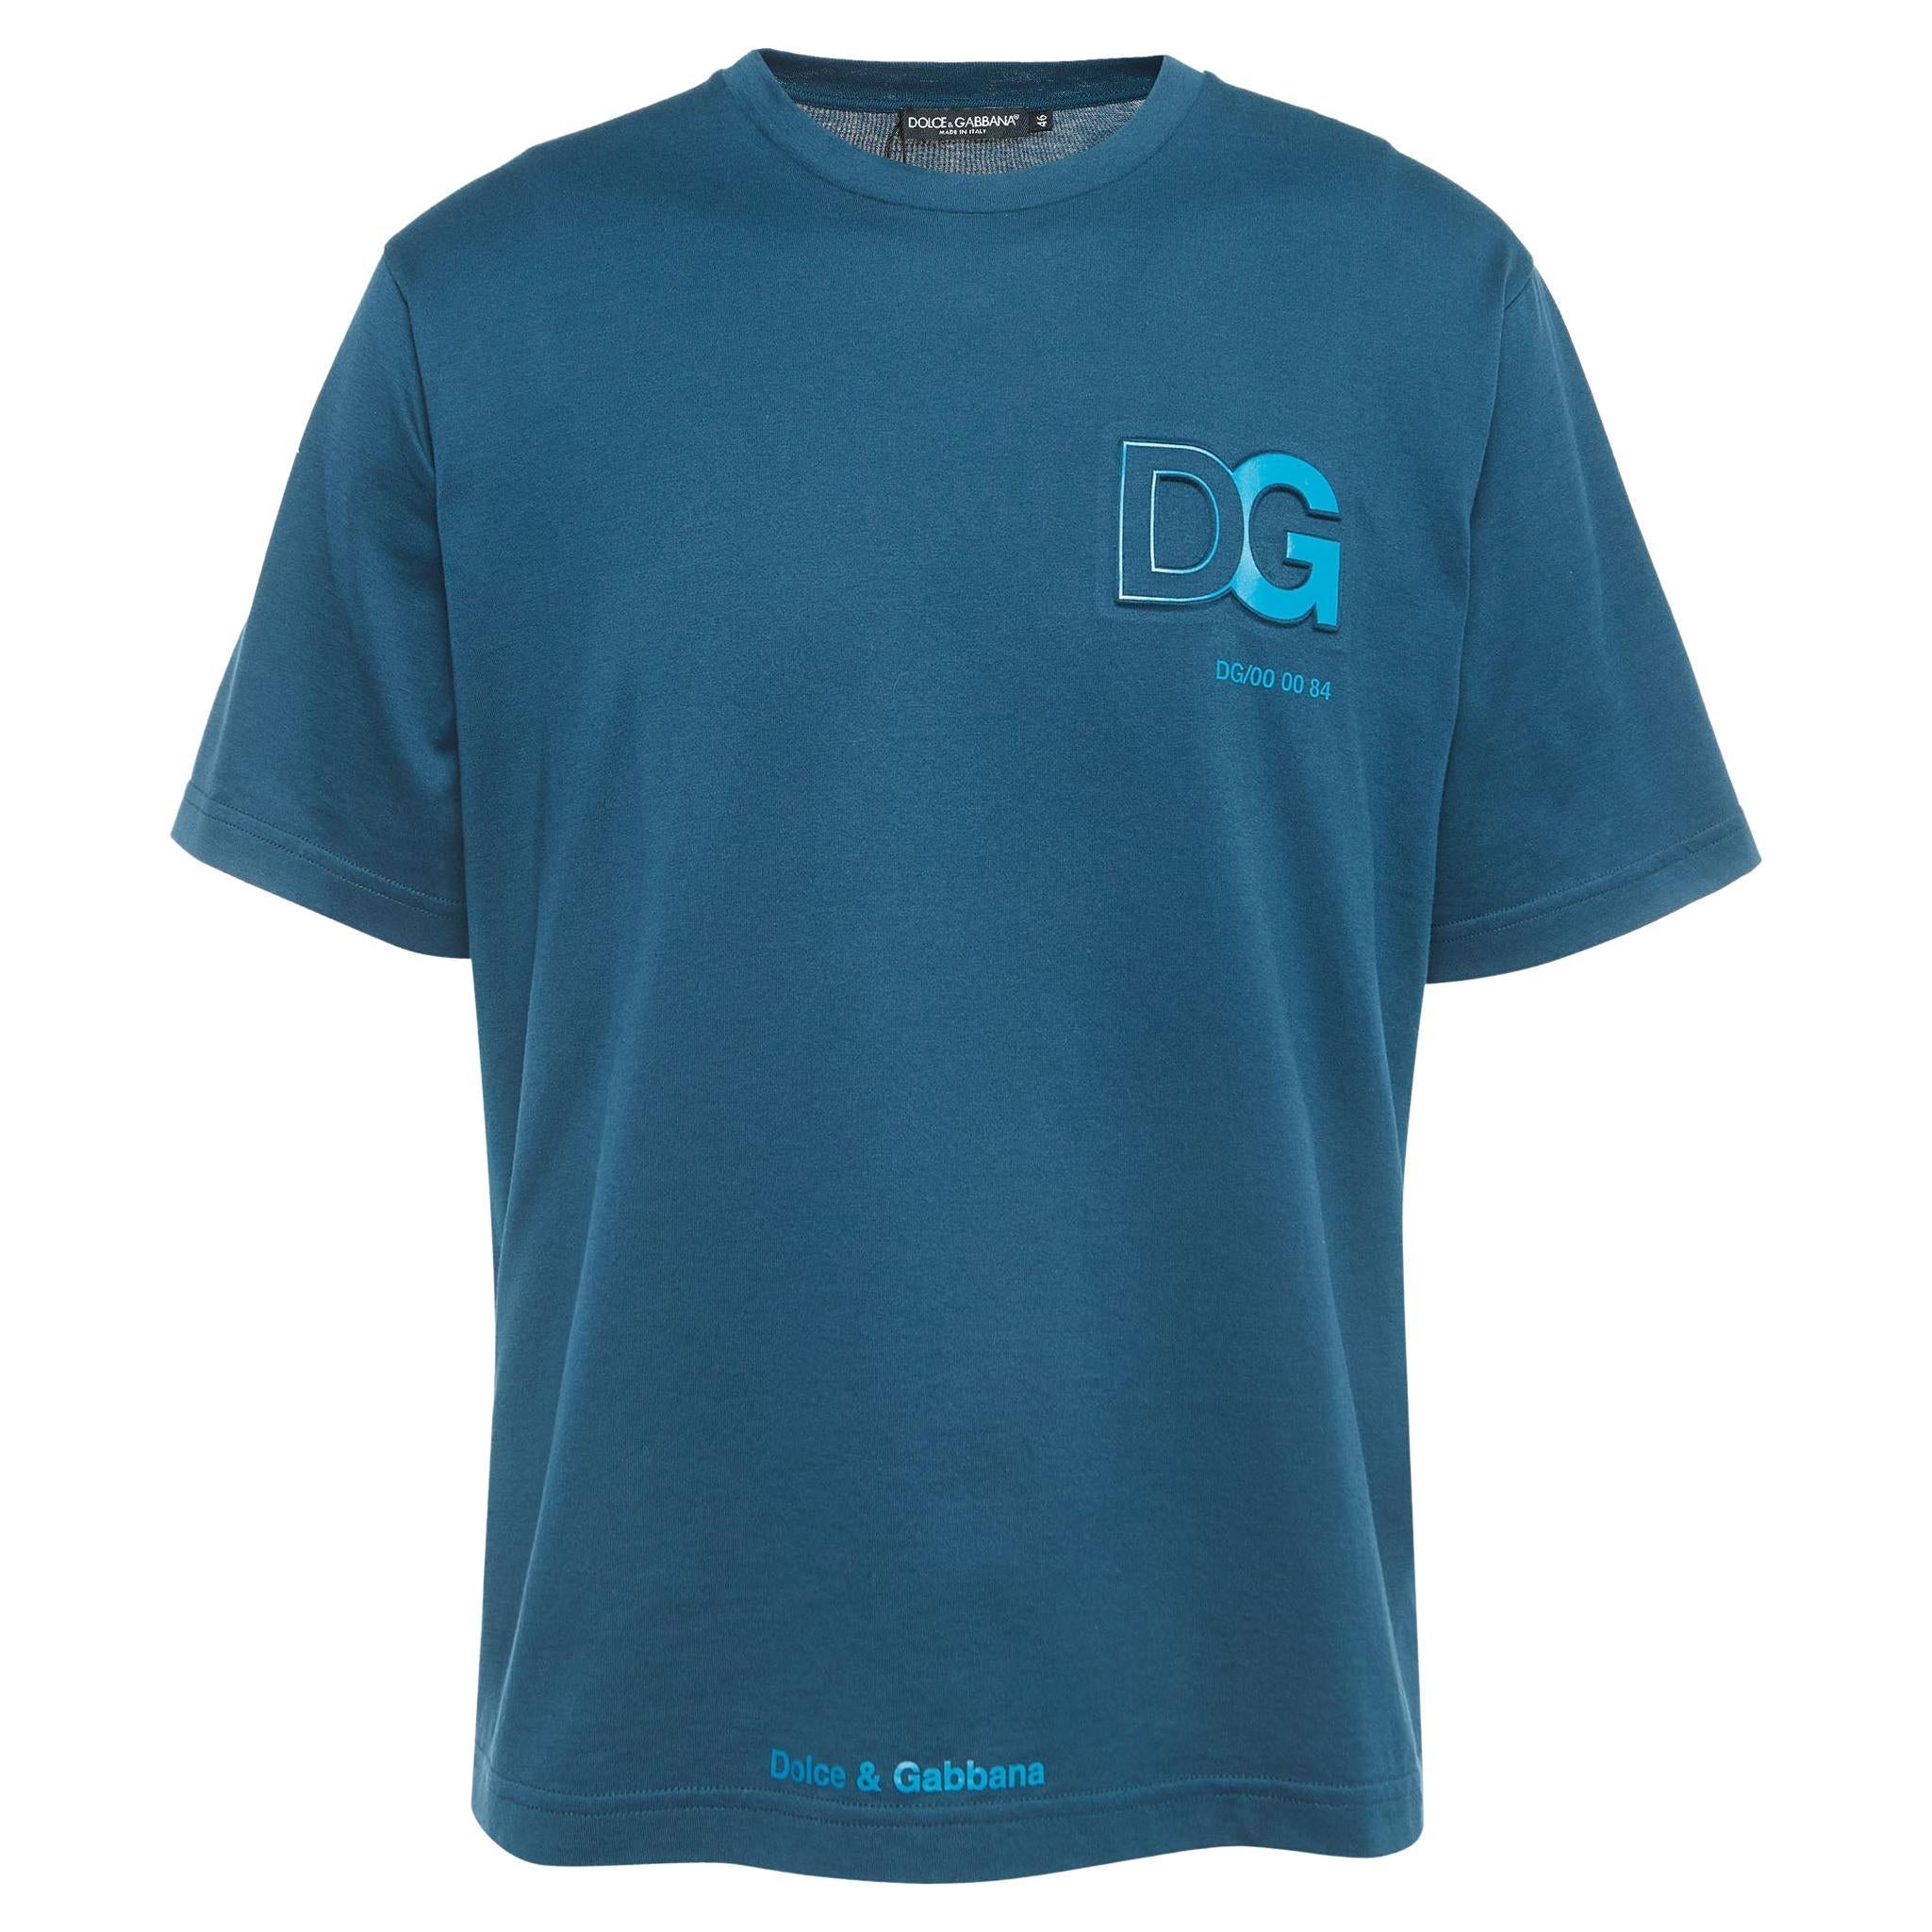 Dolce & Gabbana Teal Blue Logo Embossed Cotton Crew Neck T-Shirt S